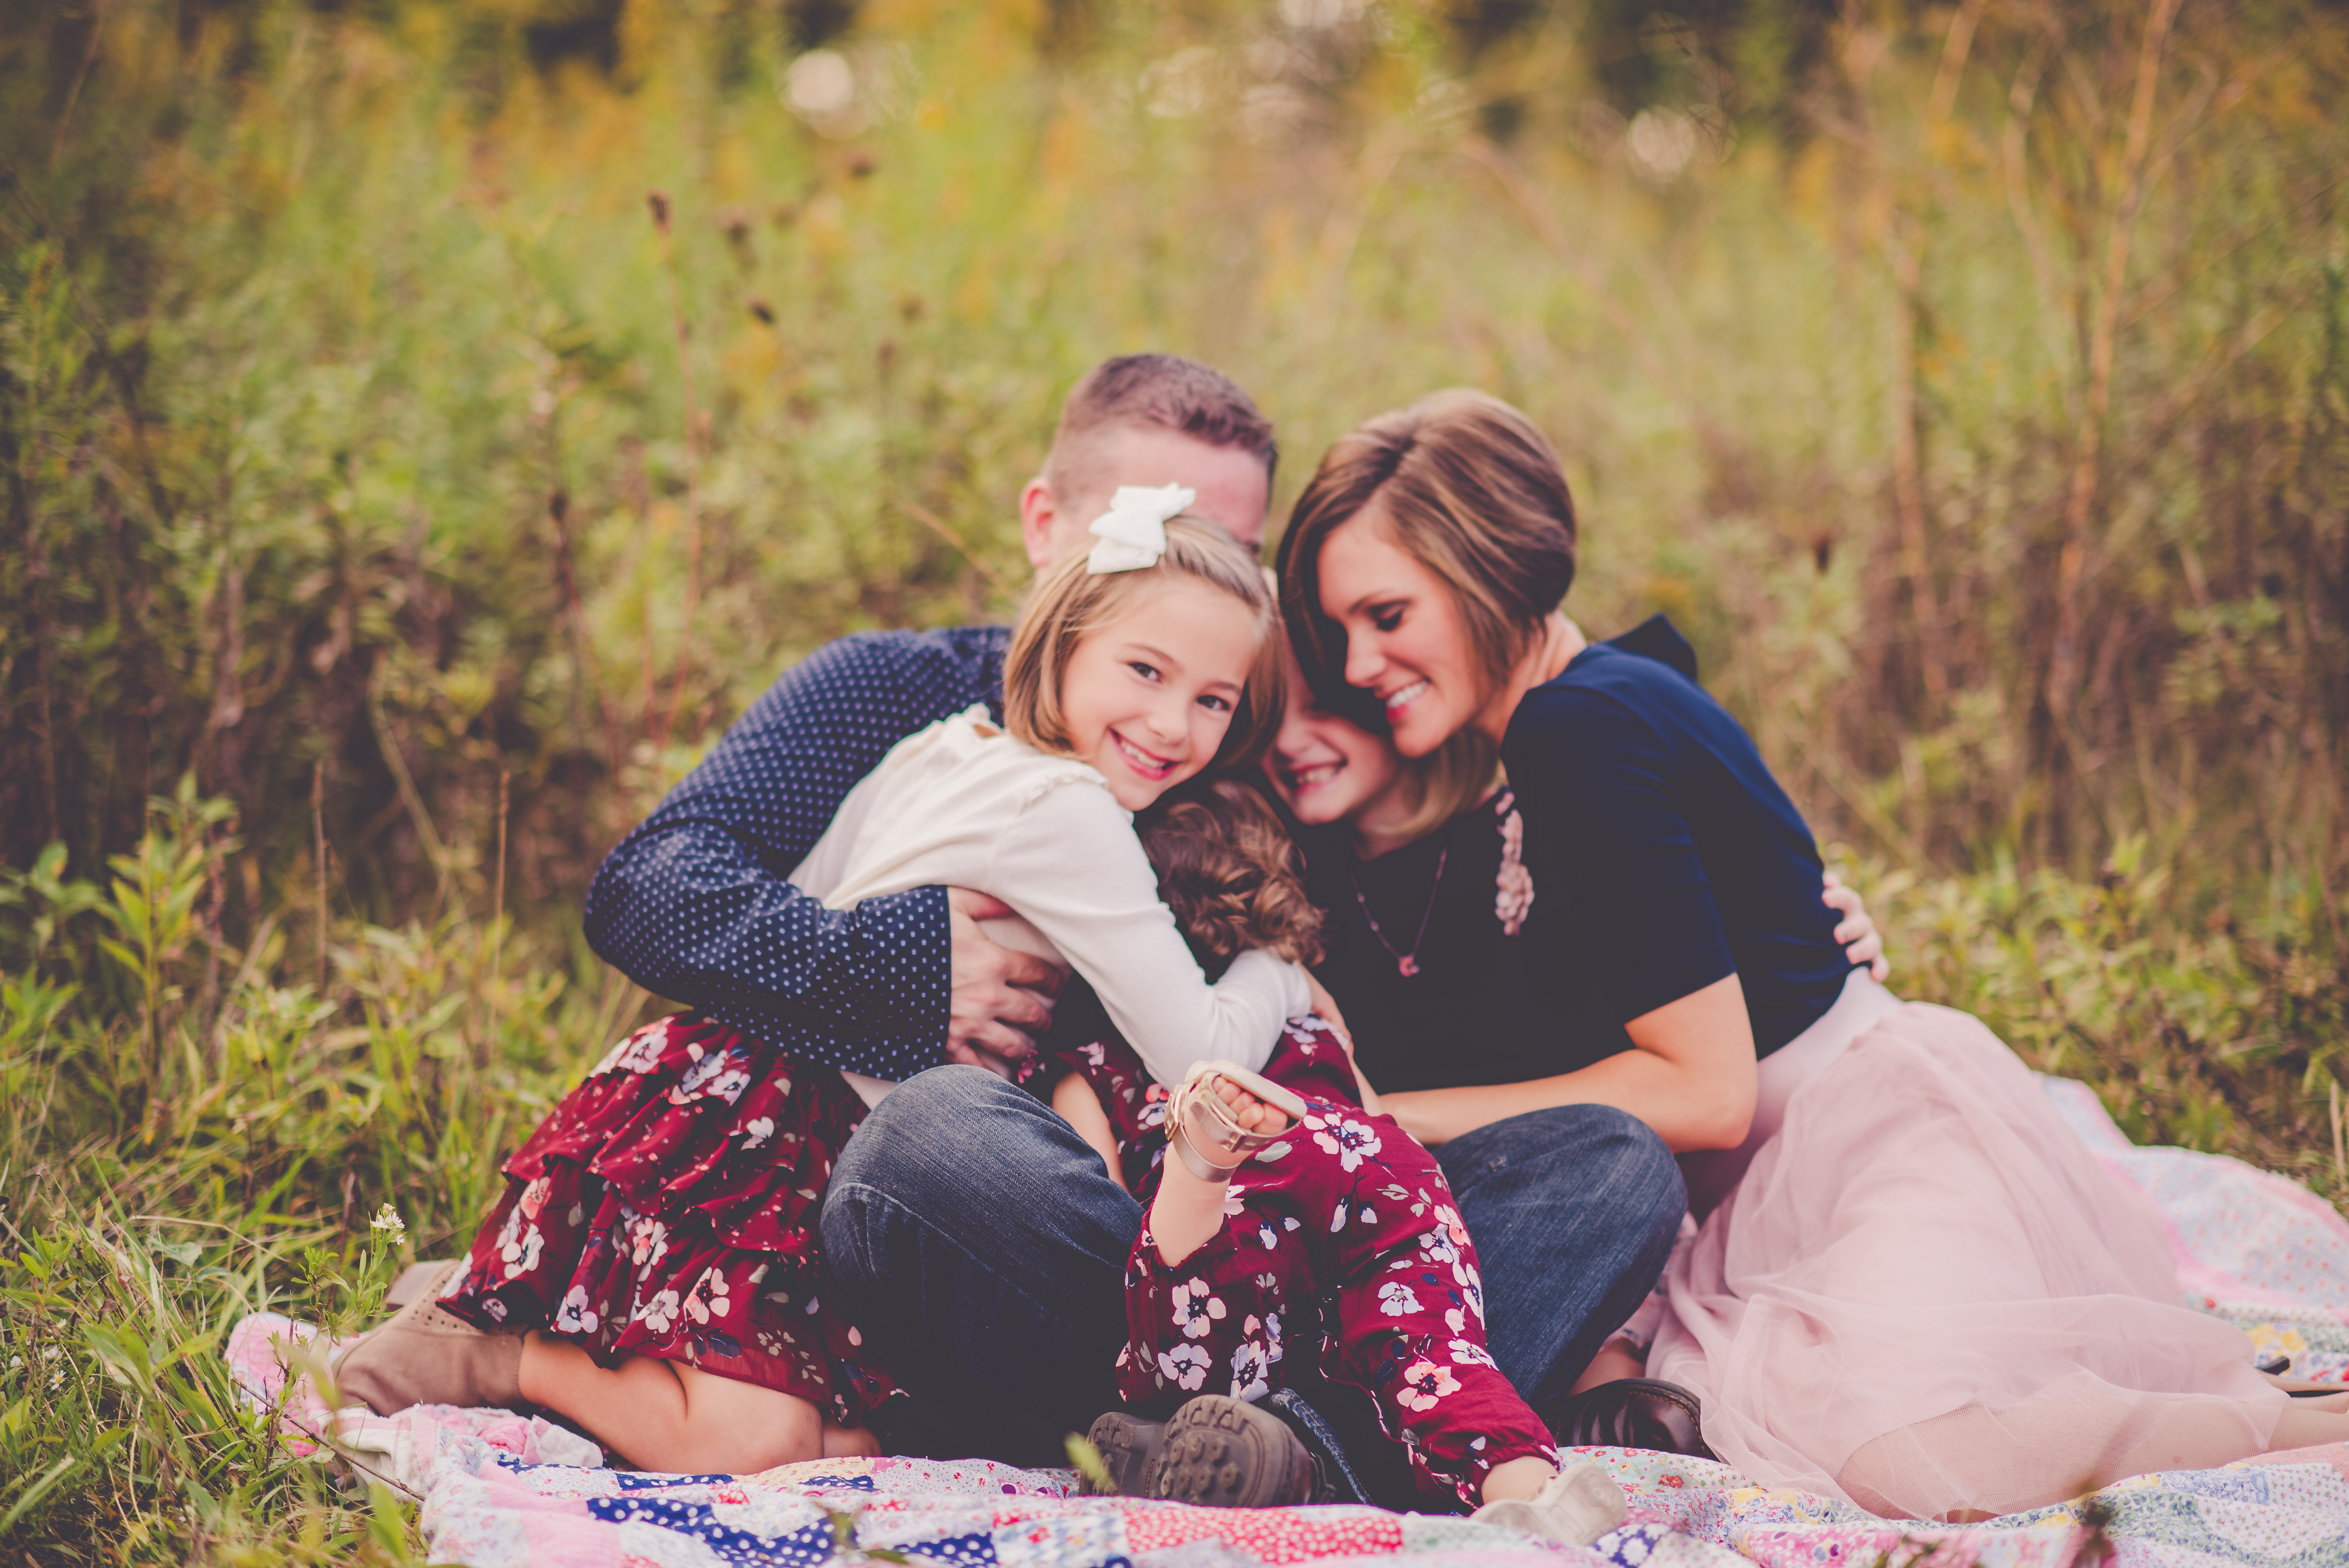 Kara Evans Photographer - Fall Mini Sessions - Central Illinois Family Photographer